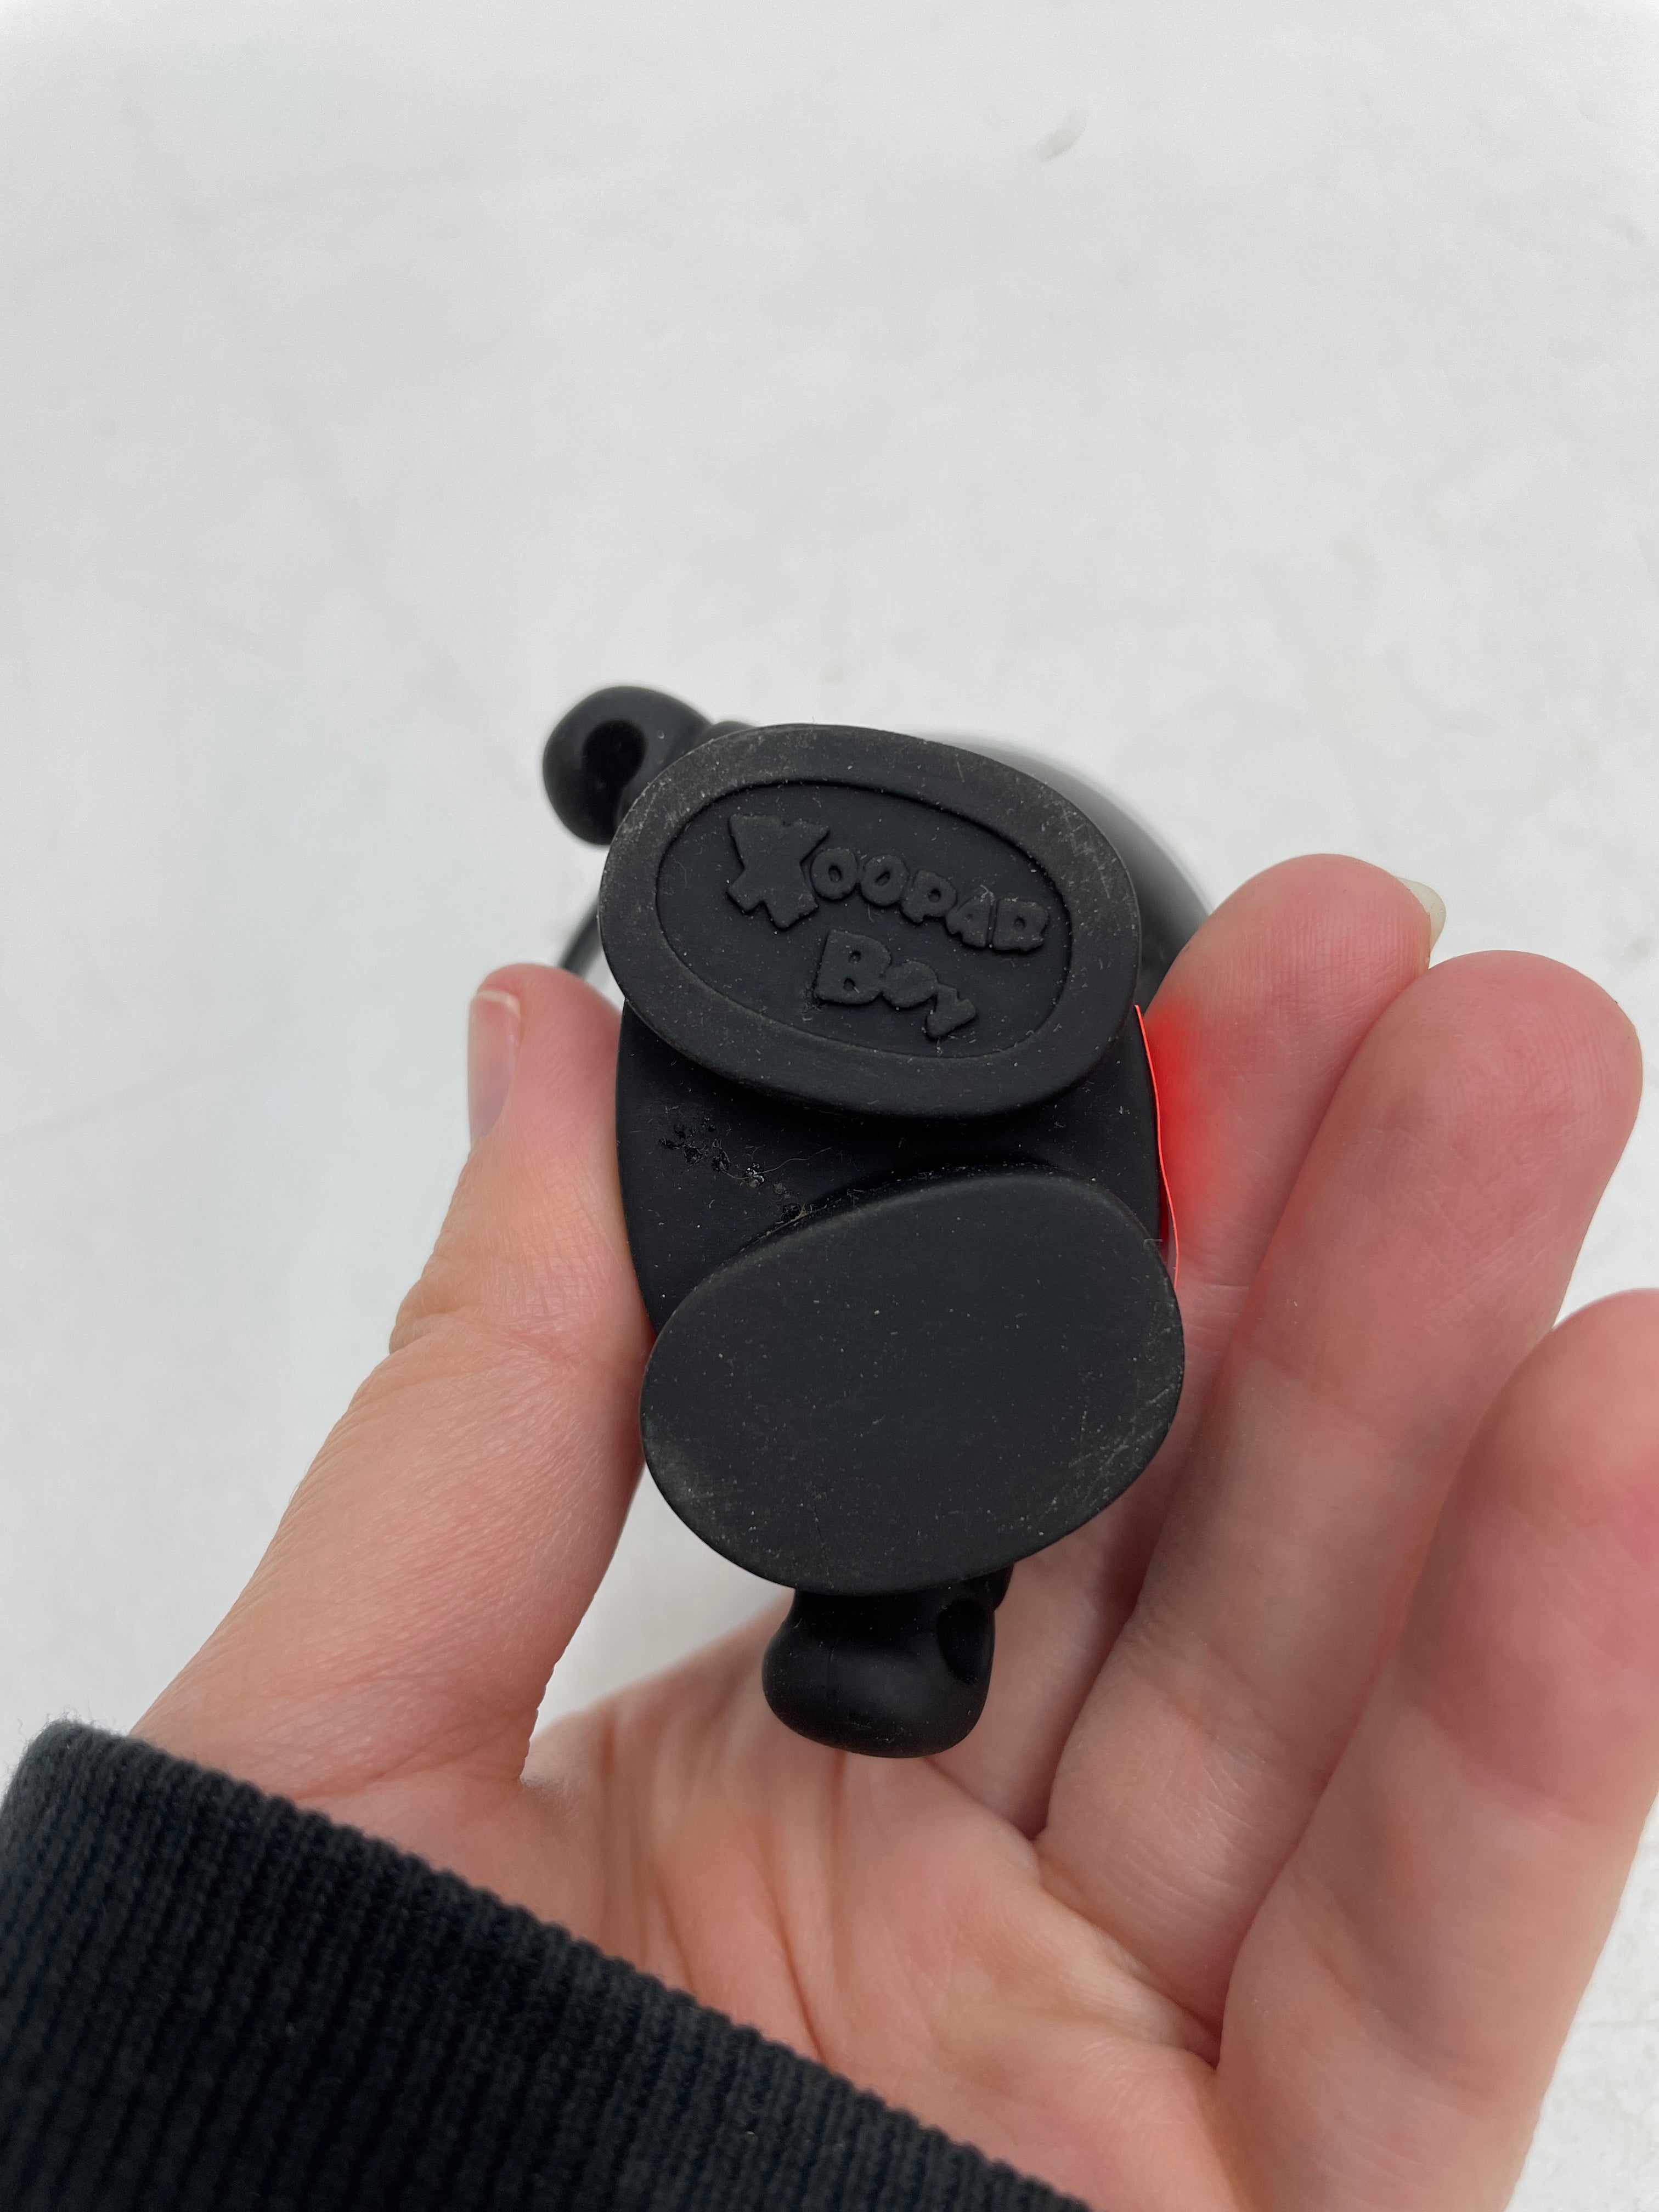 Xoopar Boy Mini haut-parleur Bluetooth sans fil